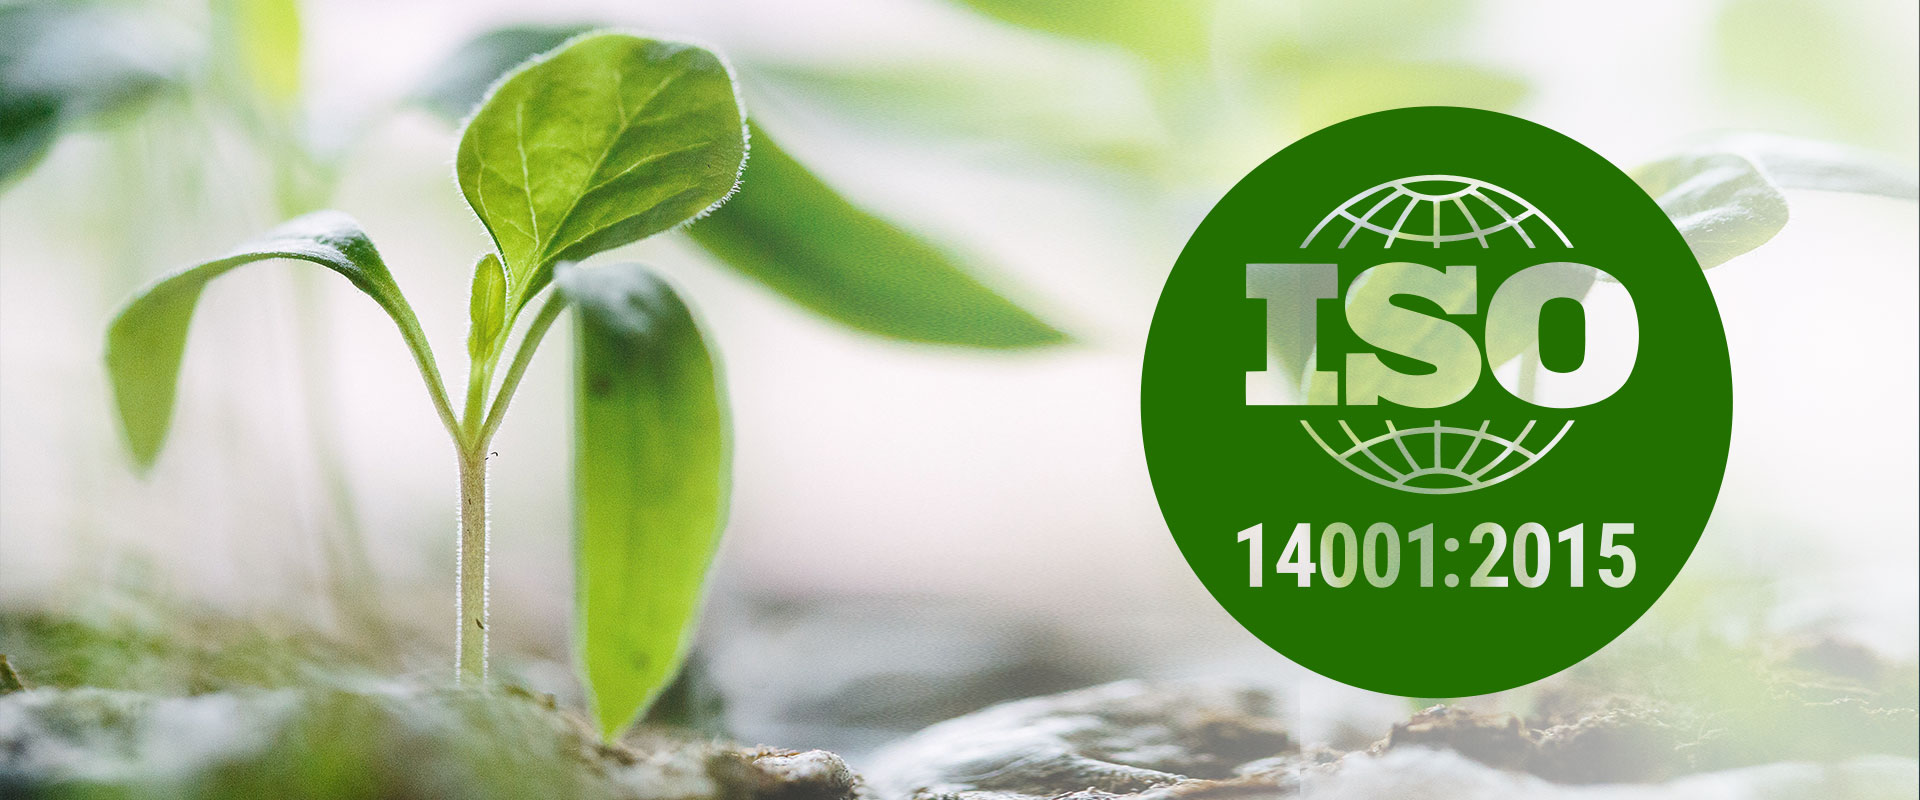 Основы и преимущества сертификации ISO 14001